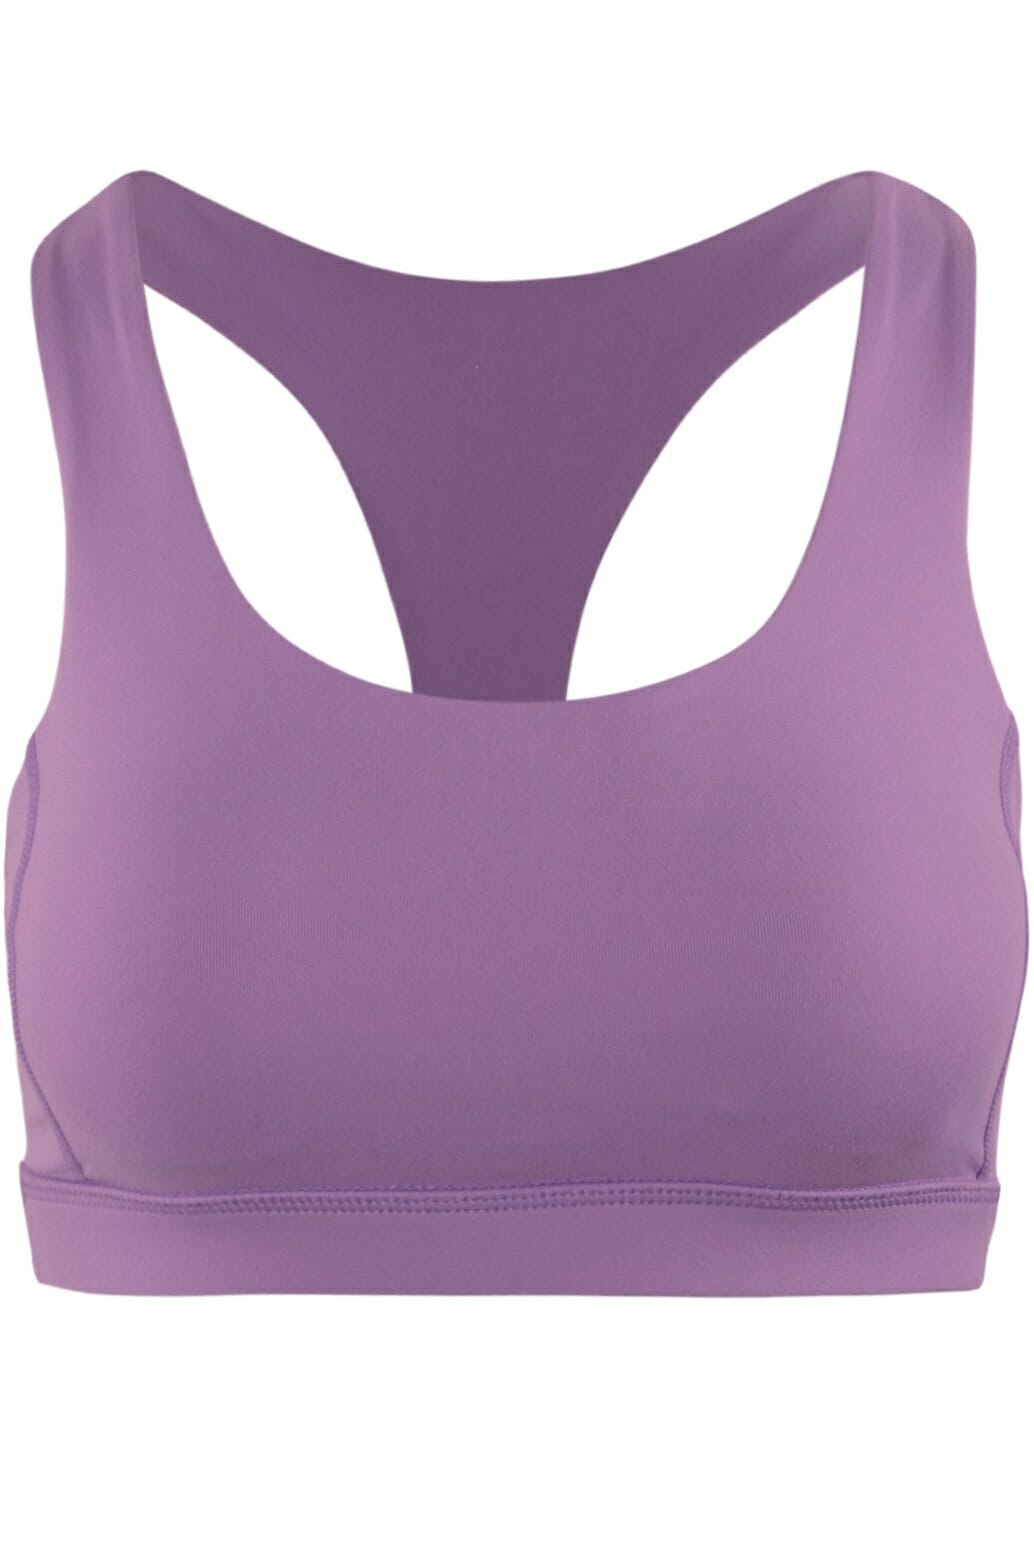 90 degree • Sports bra  Sports bra, Purple sports bras, Bra